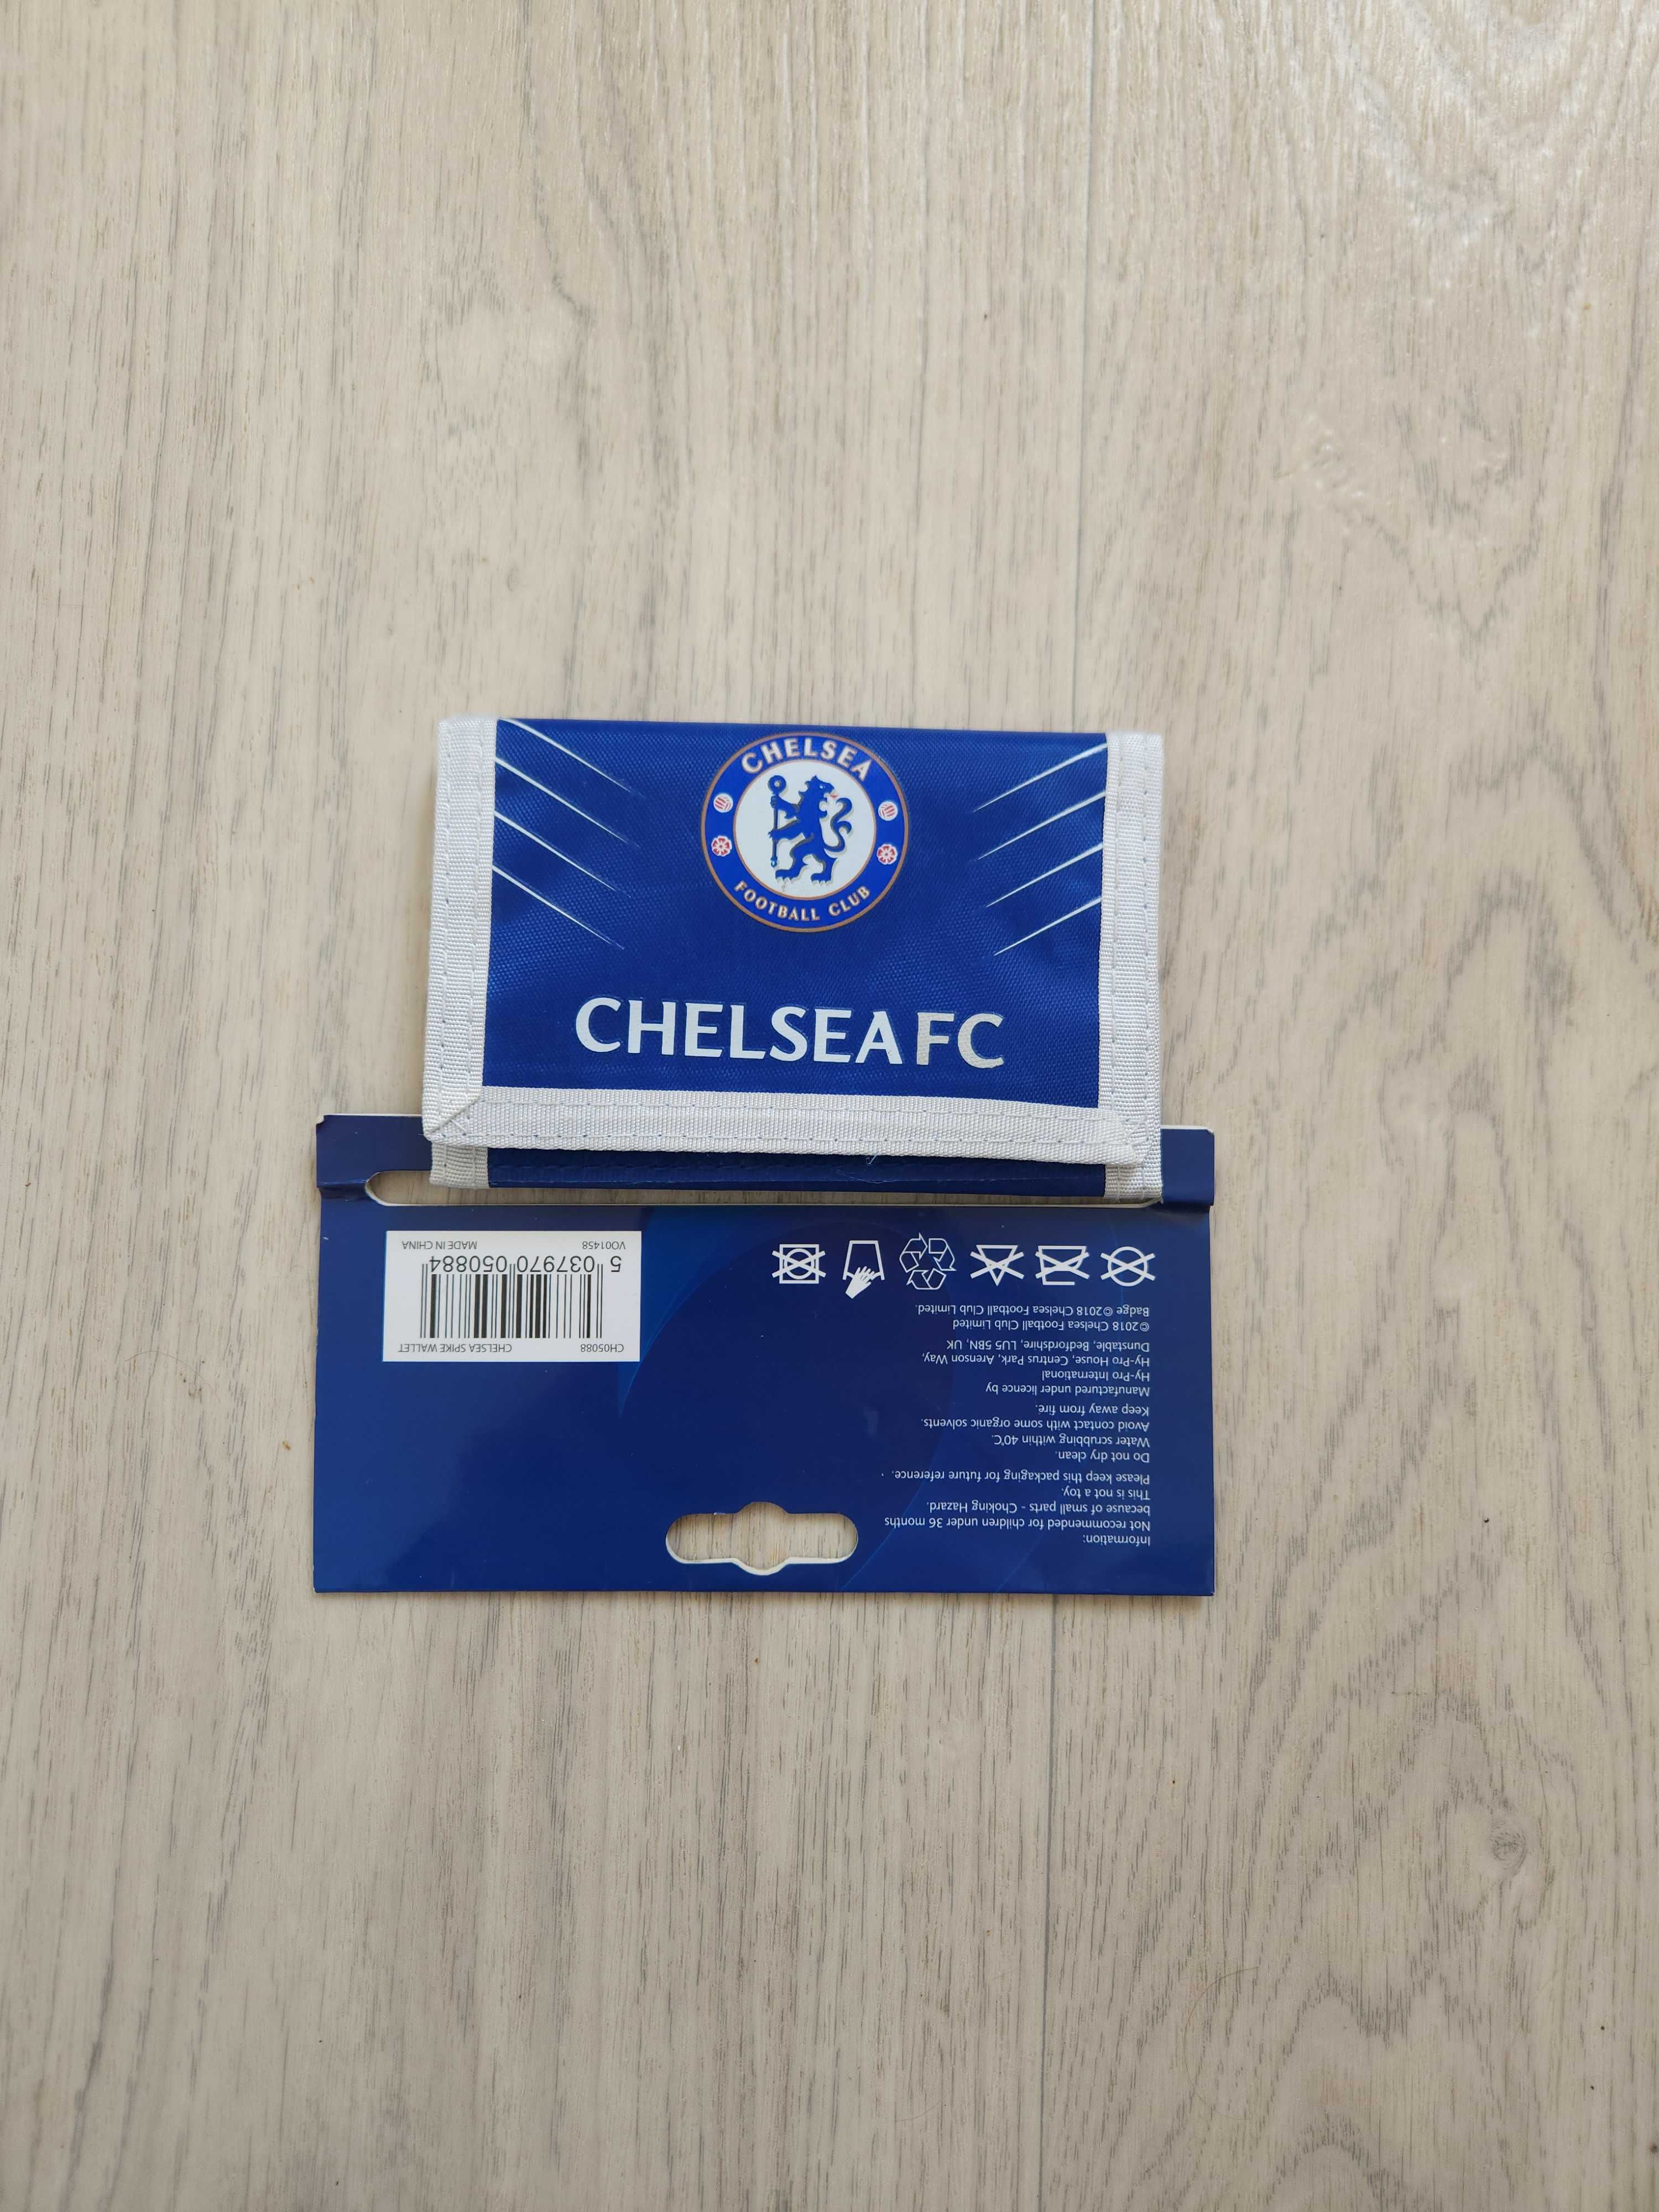 Chelsea wаllet кошелёк